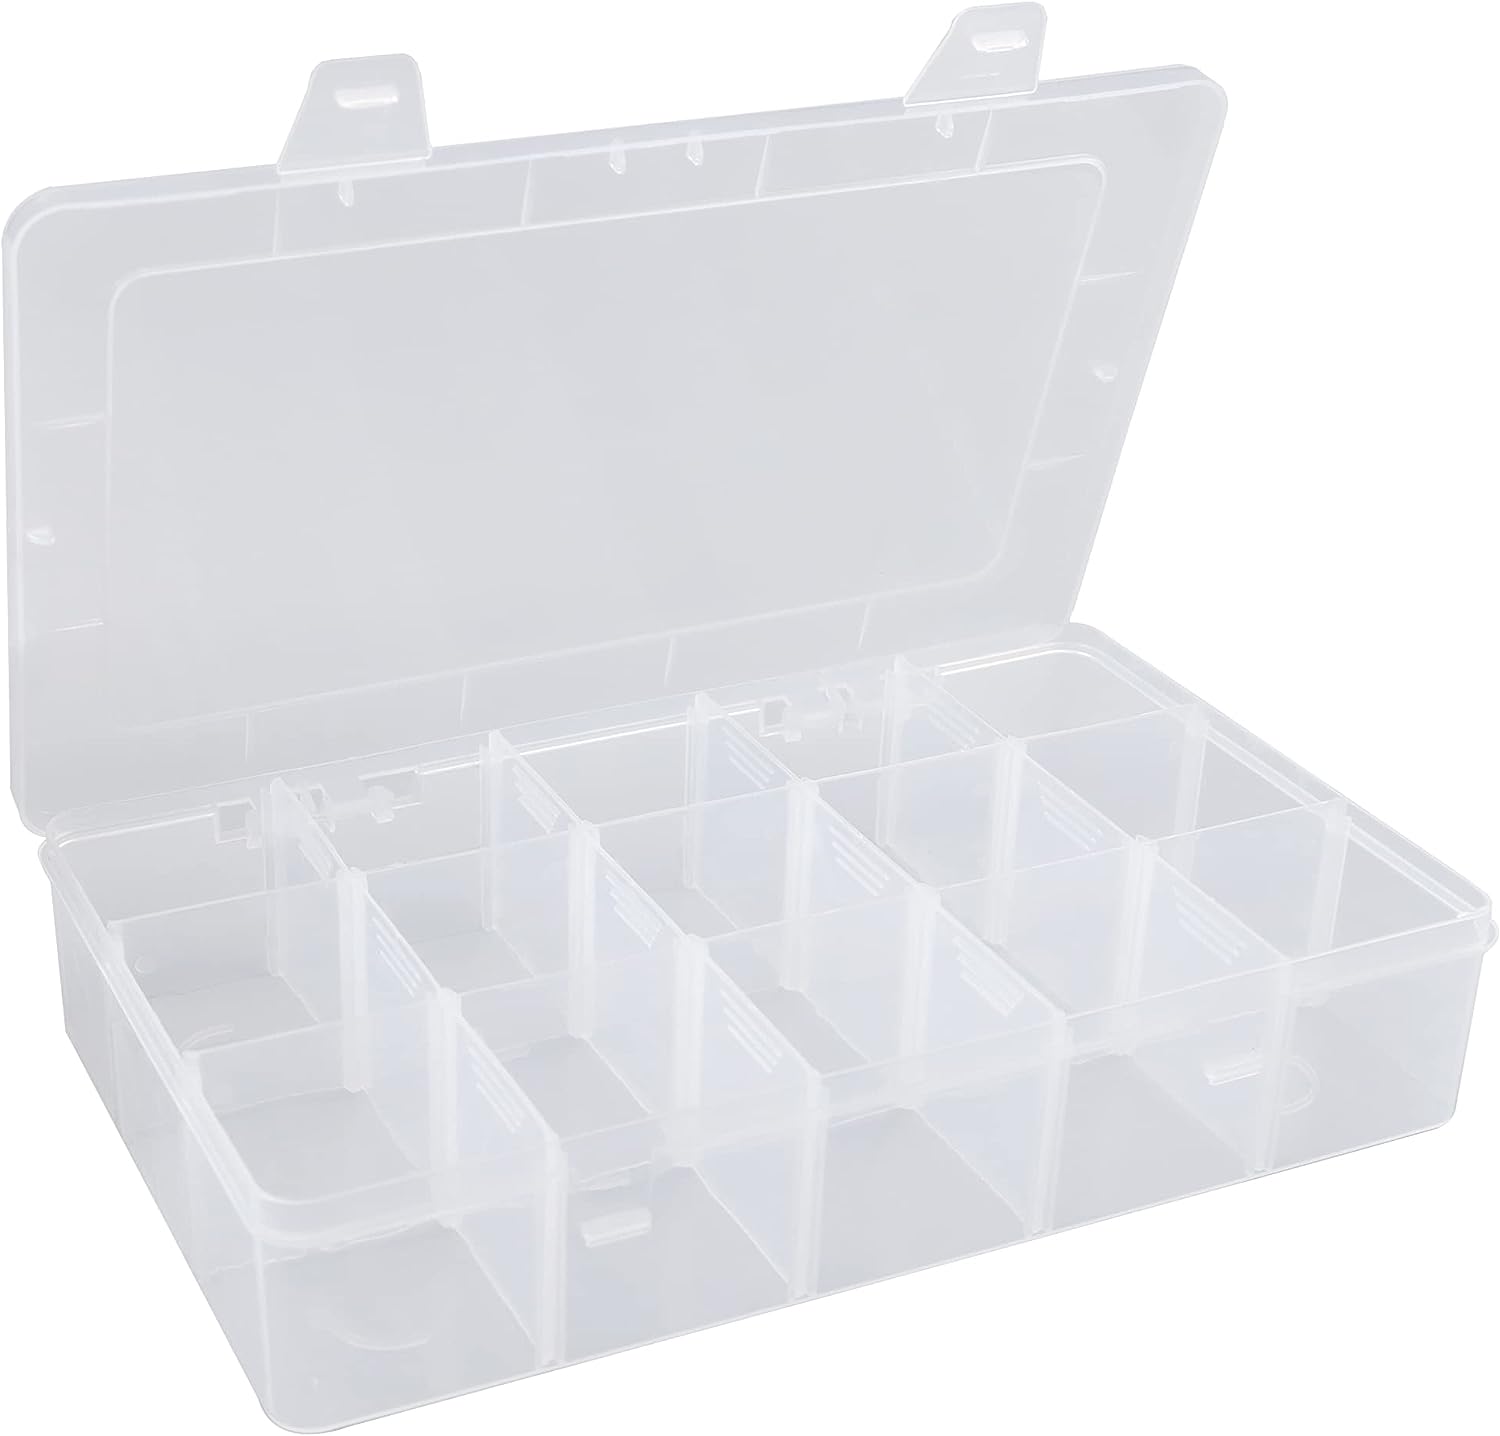 Hlotmeky Bead Organizer Box 3 Pack Plastic Craft Organizer 36 Grid Compartment Organizer Box with Dividers Clear Tackle Box